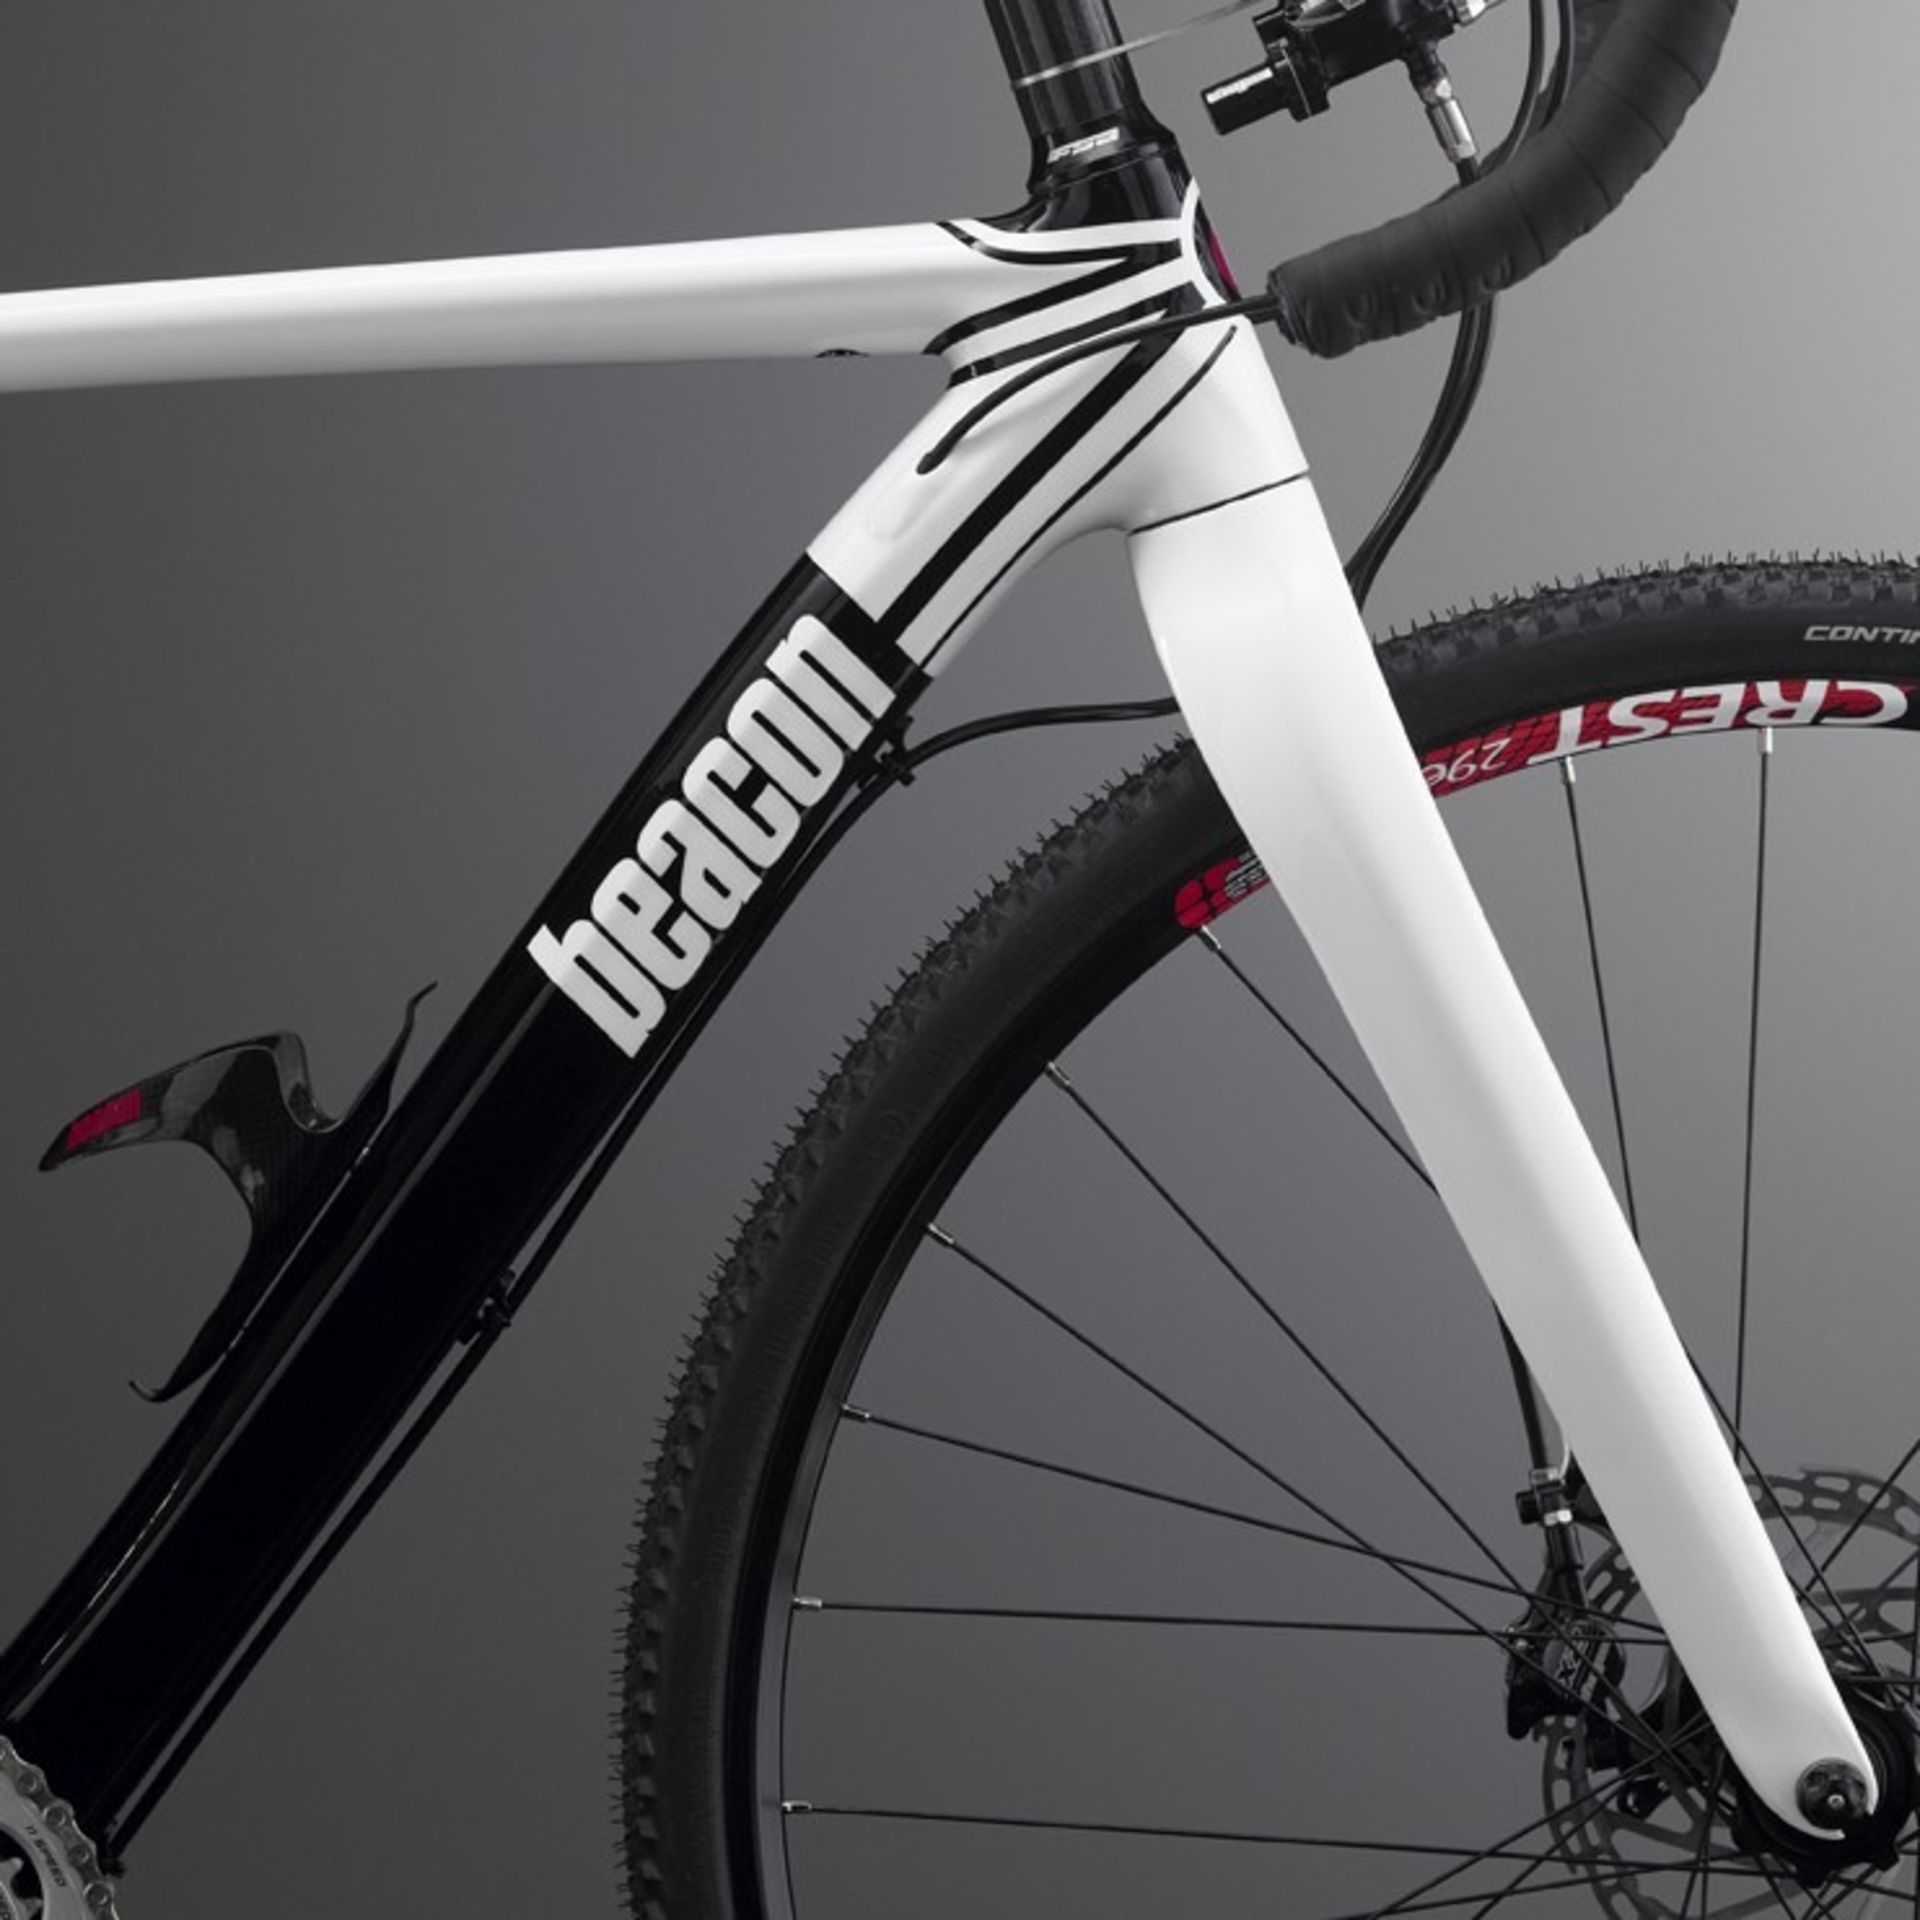 1 x Beacon Model BF-45, Size 525, Carbon Fibre Bike Frame in Black & White. - Image 3 of 3